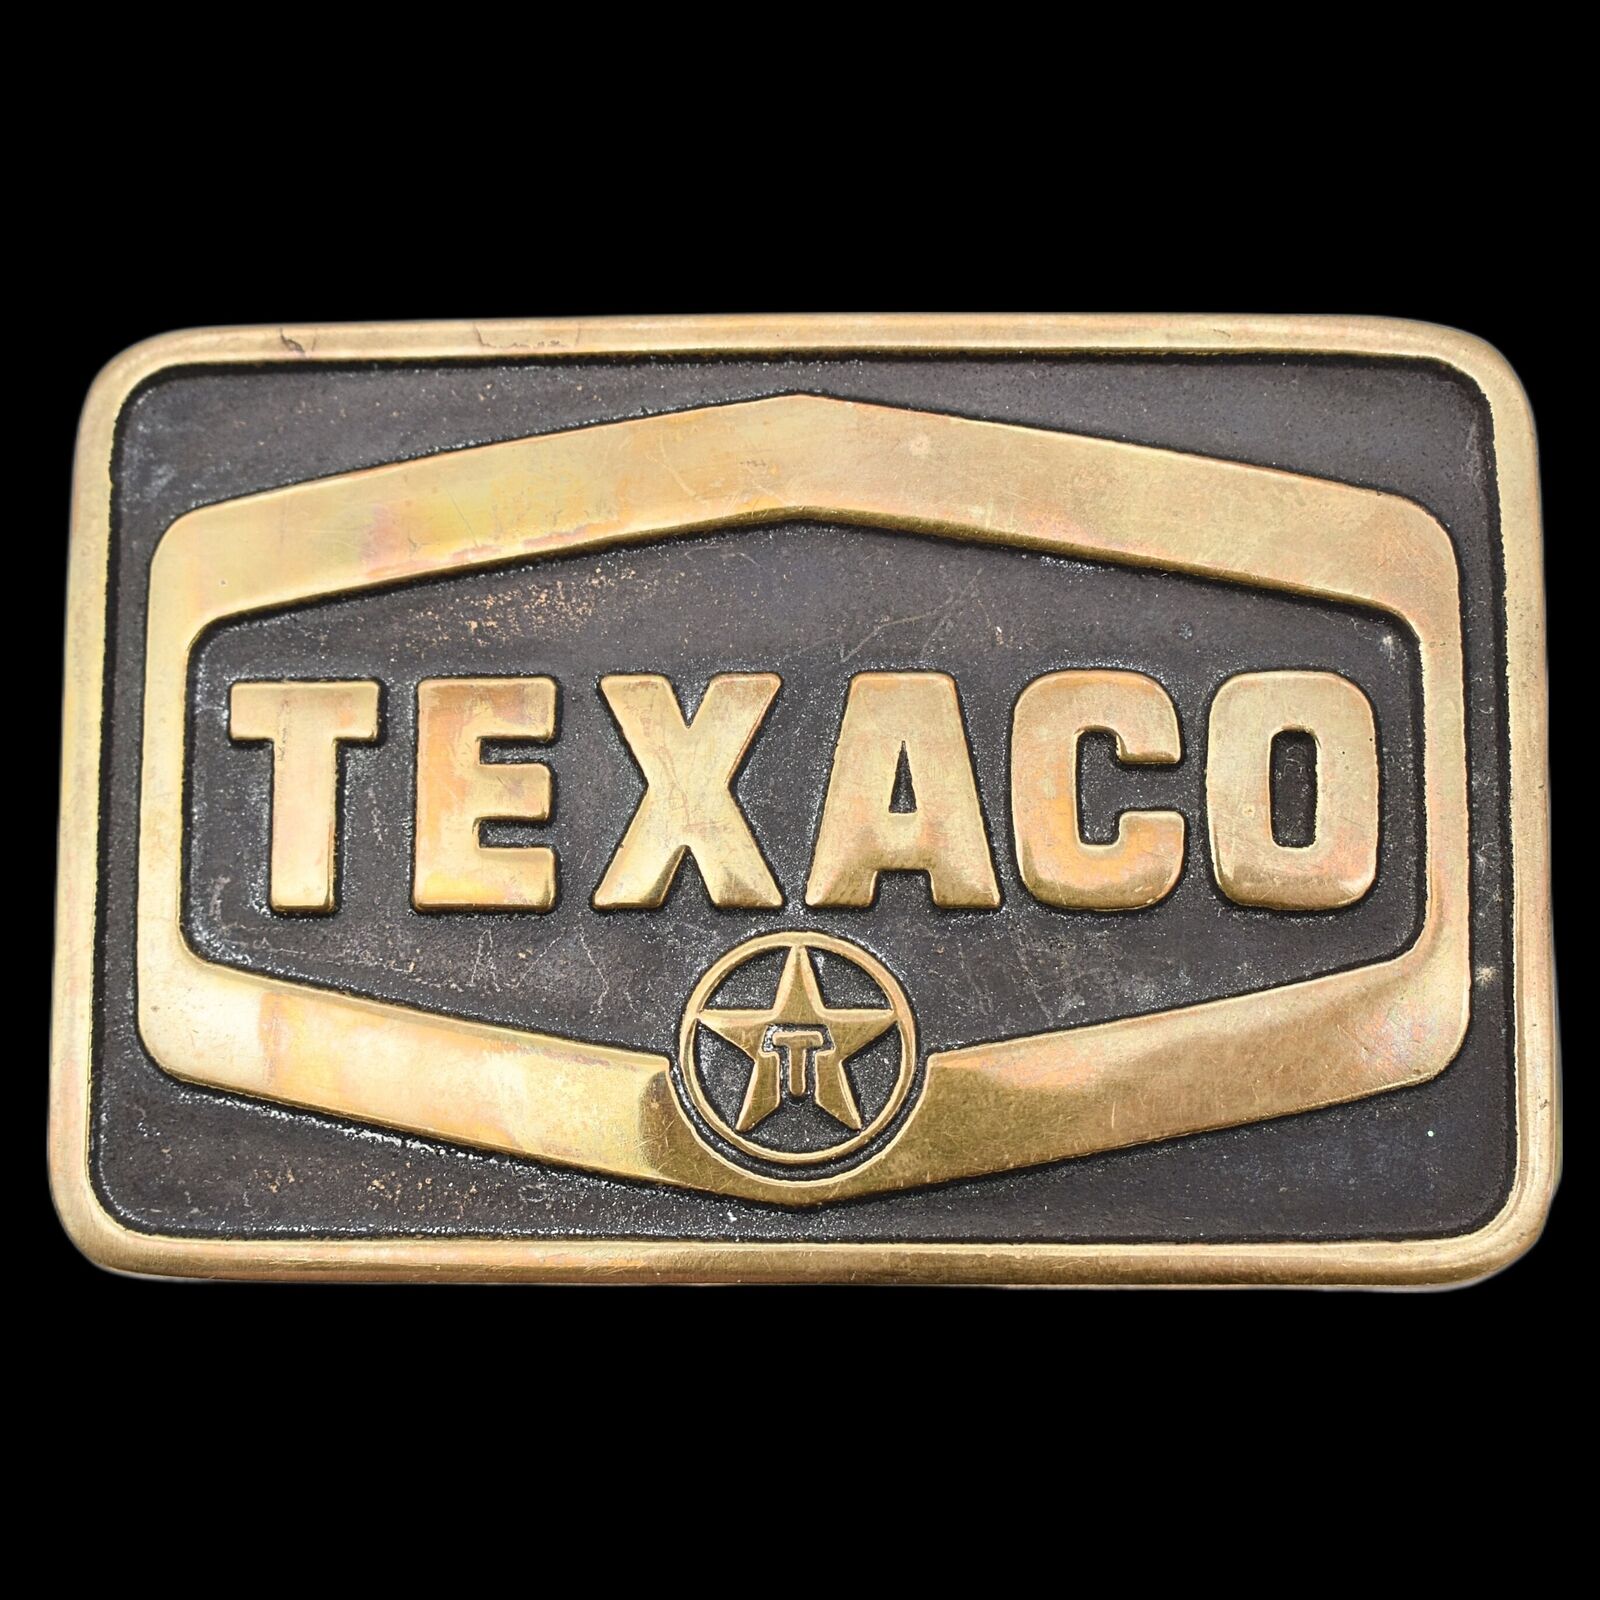 1980s Texaco Gasoline Co Service Station Oil Solid Brass Vintage Belt Buckle